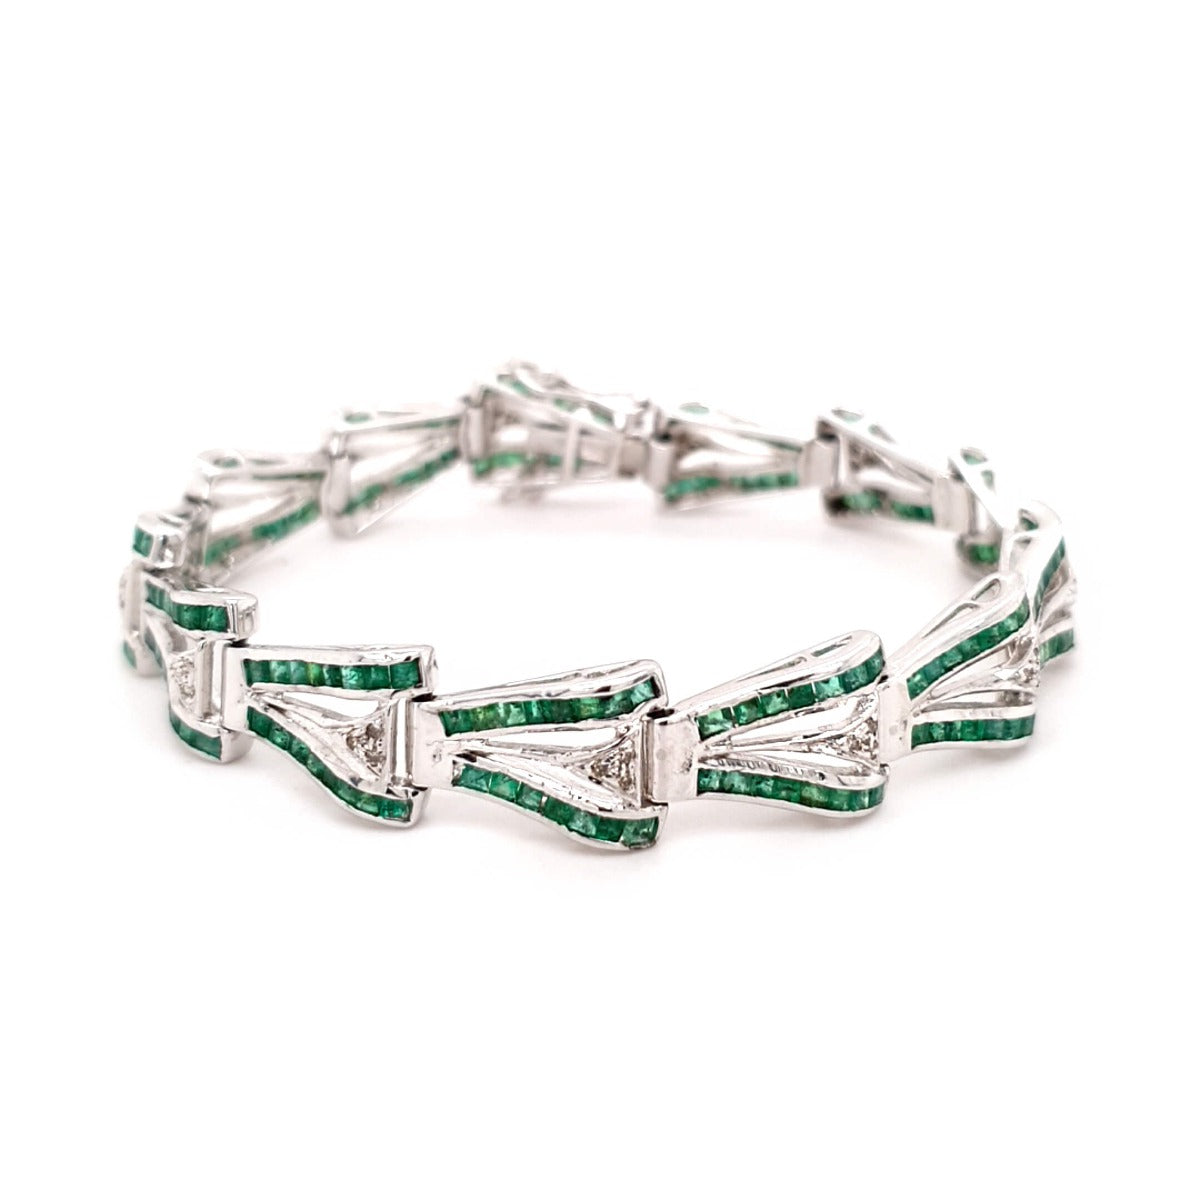 Charismatic diamond and emerald bracelet